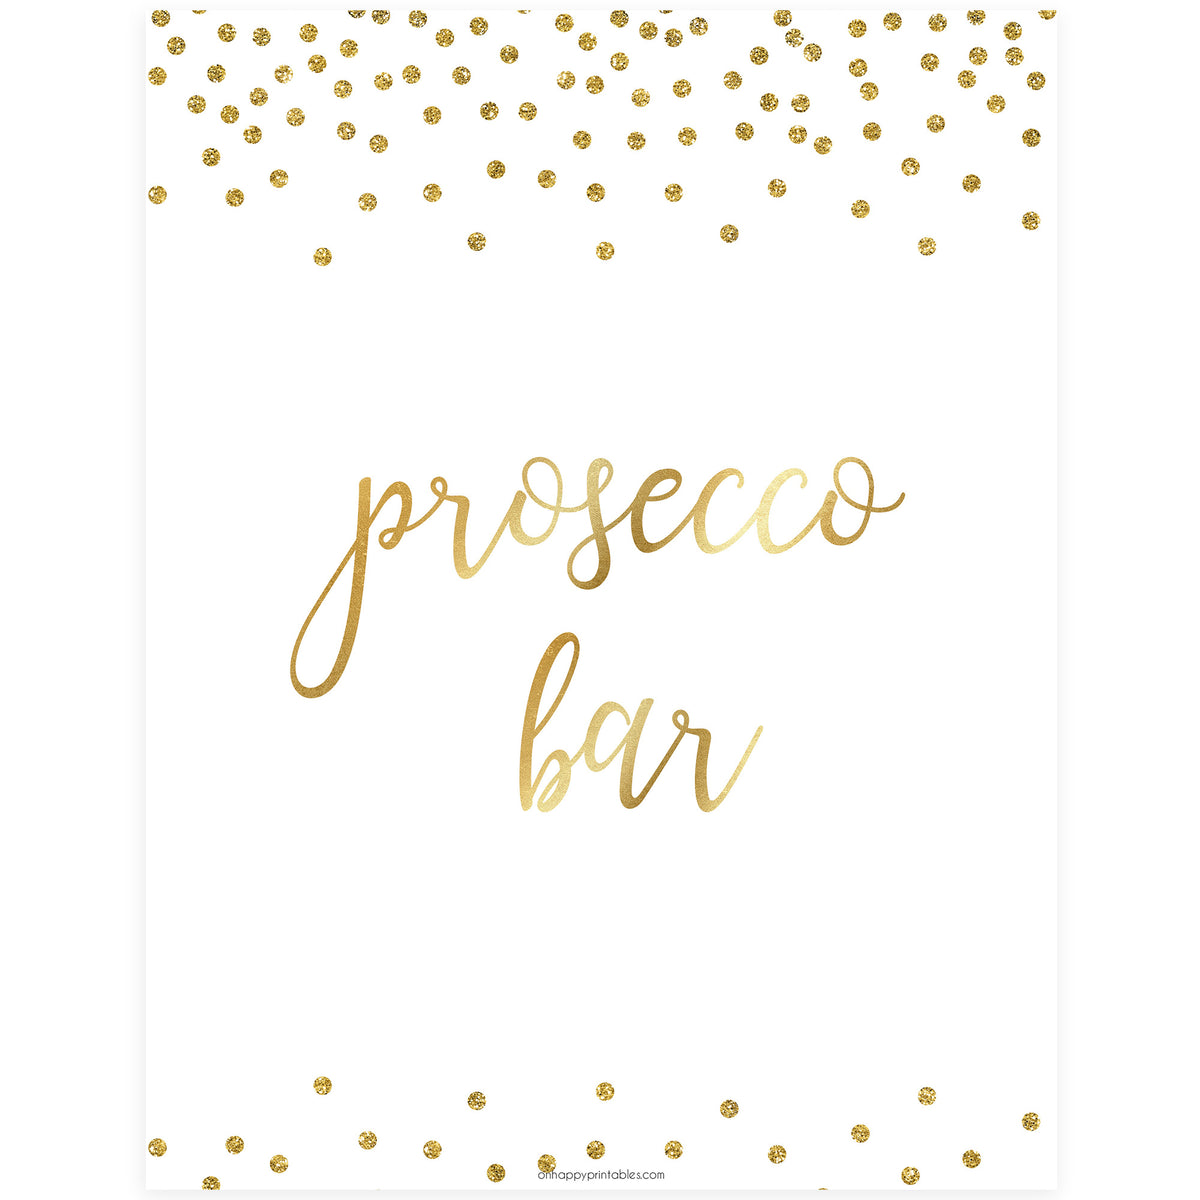 Prosecco Bar Sign - Gold Foil